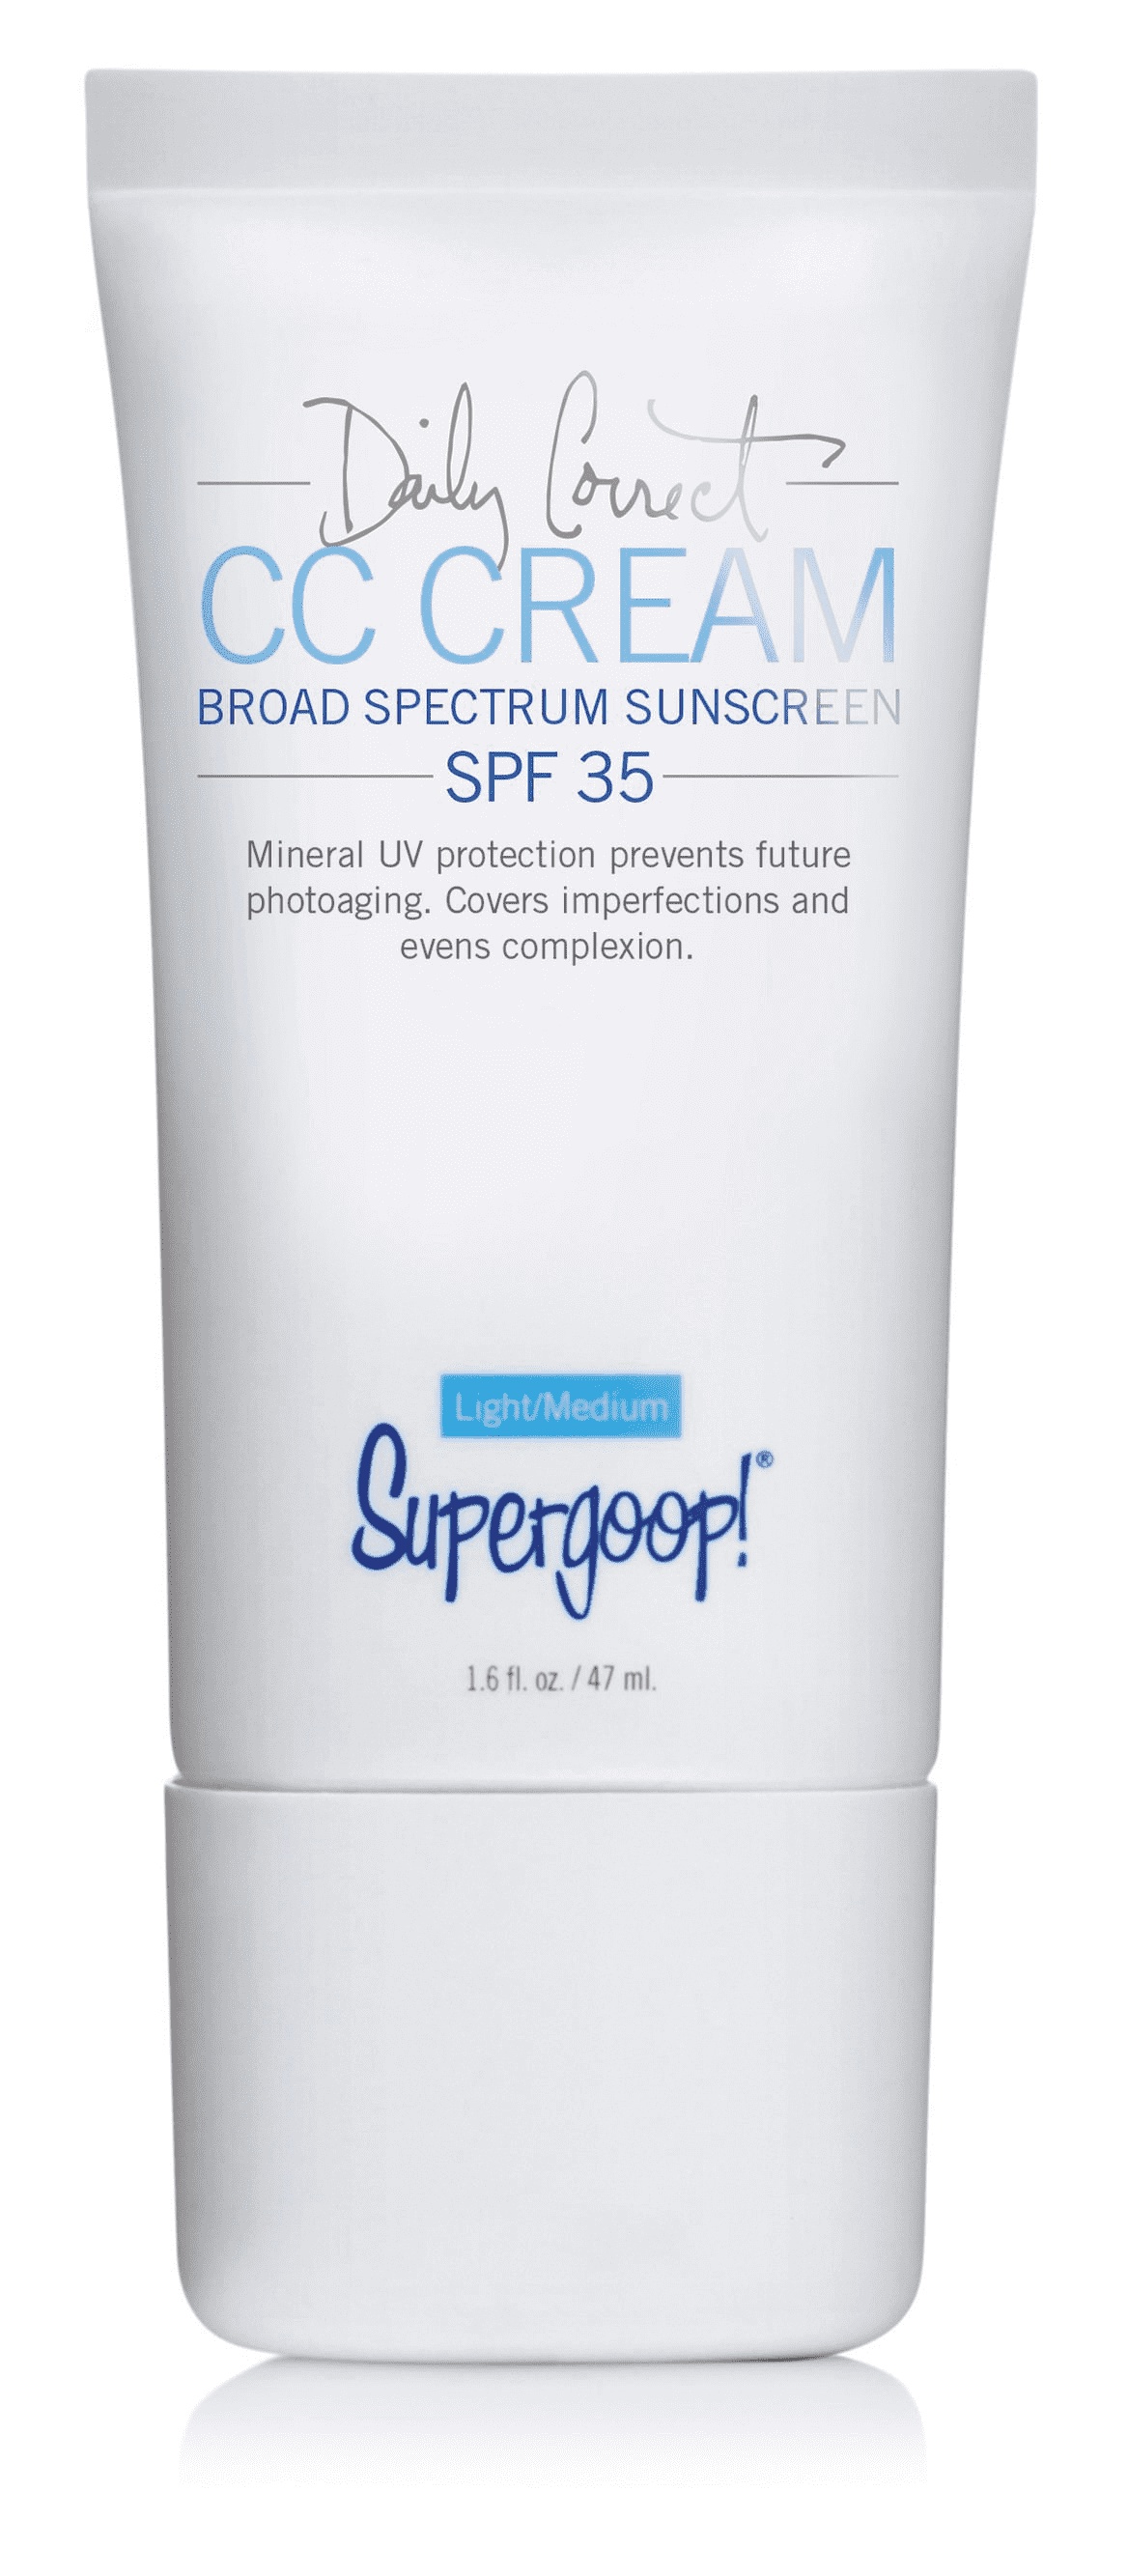 Supergoop! Cc Cream Daily Correct Broad Spectrum Spf 35 Sunscreen